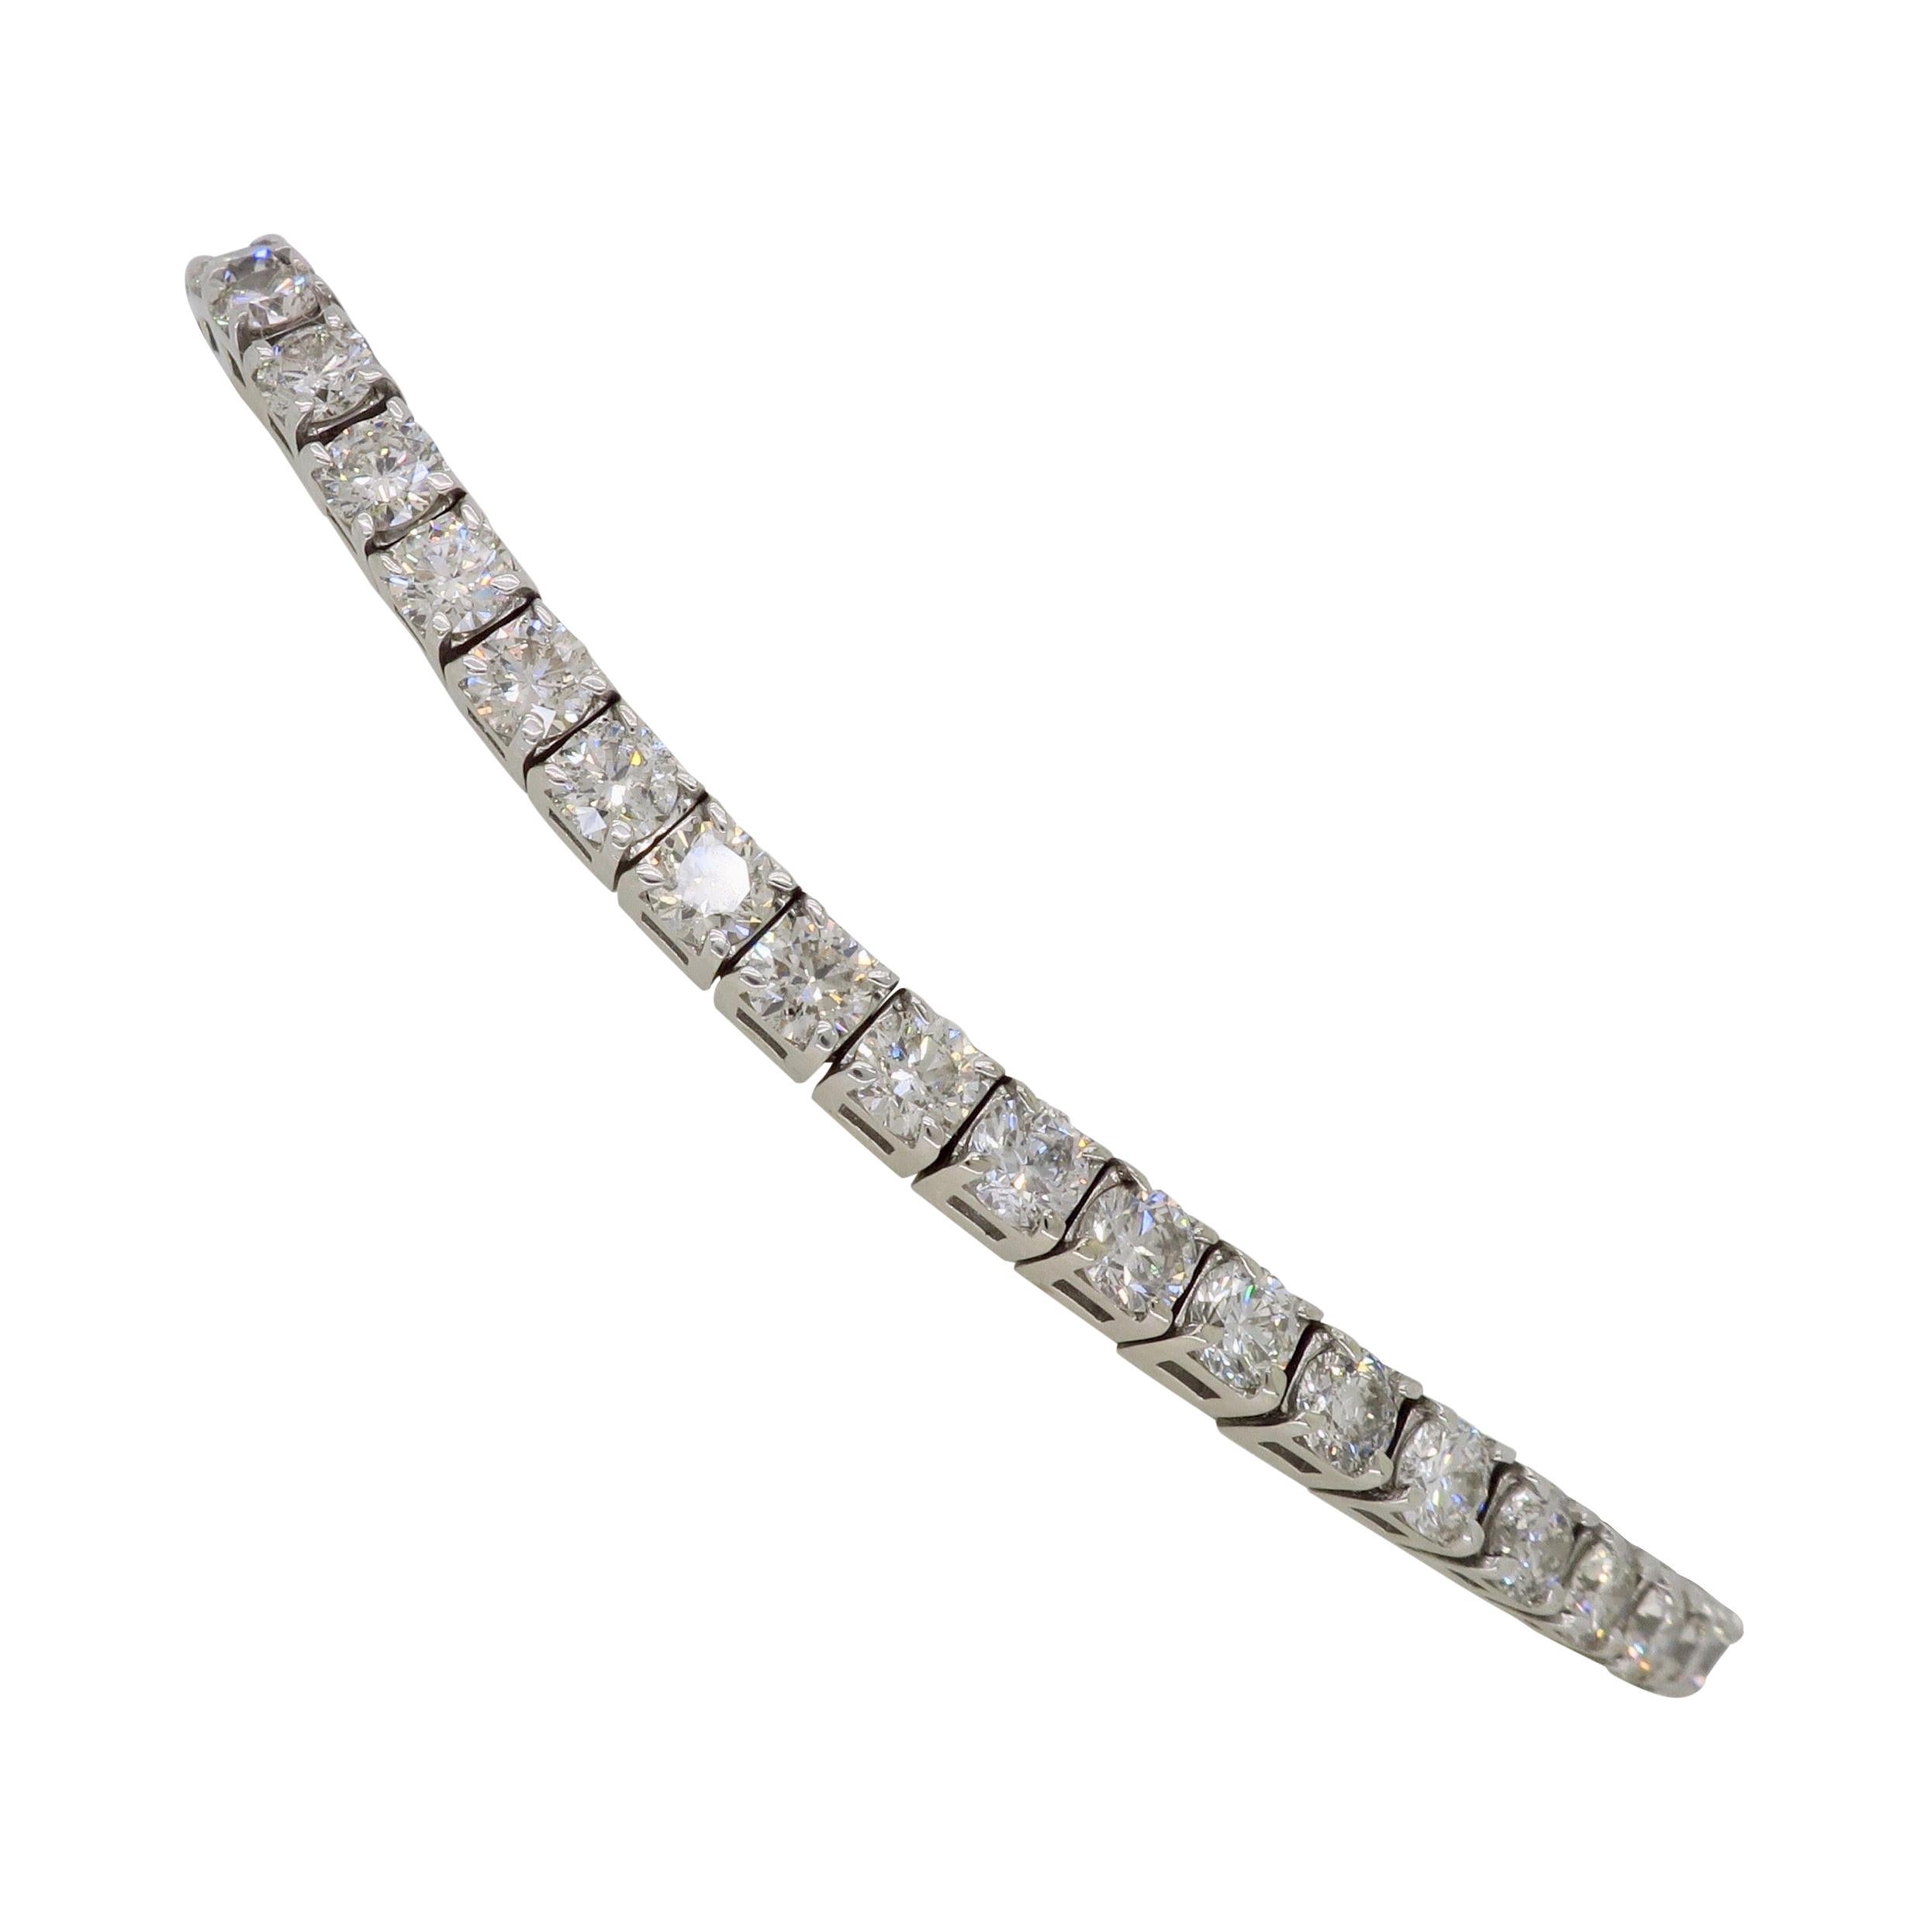 6.75 Carat Diamond Tennis Bracelet